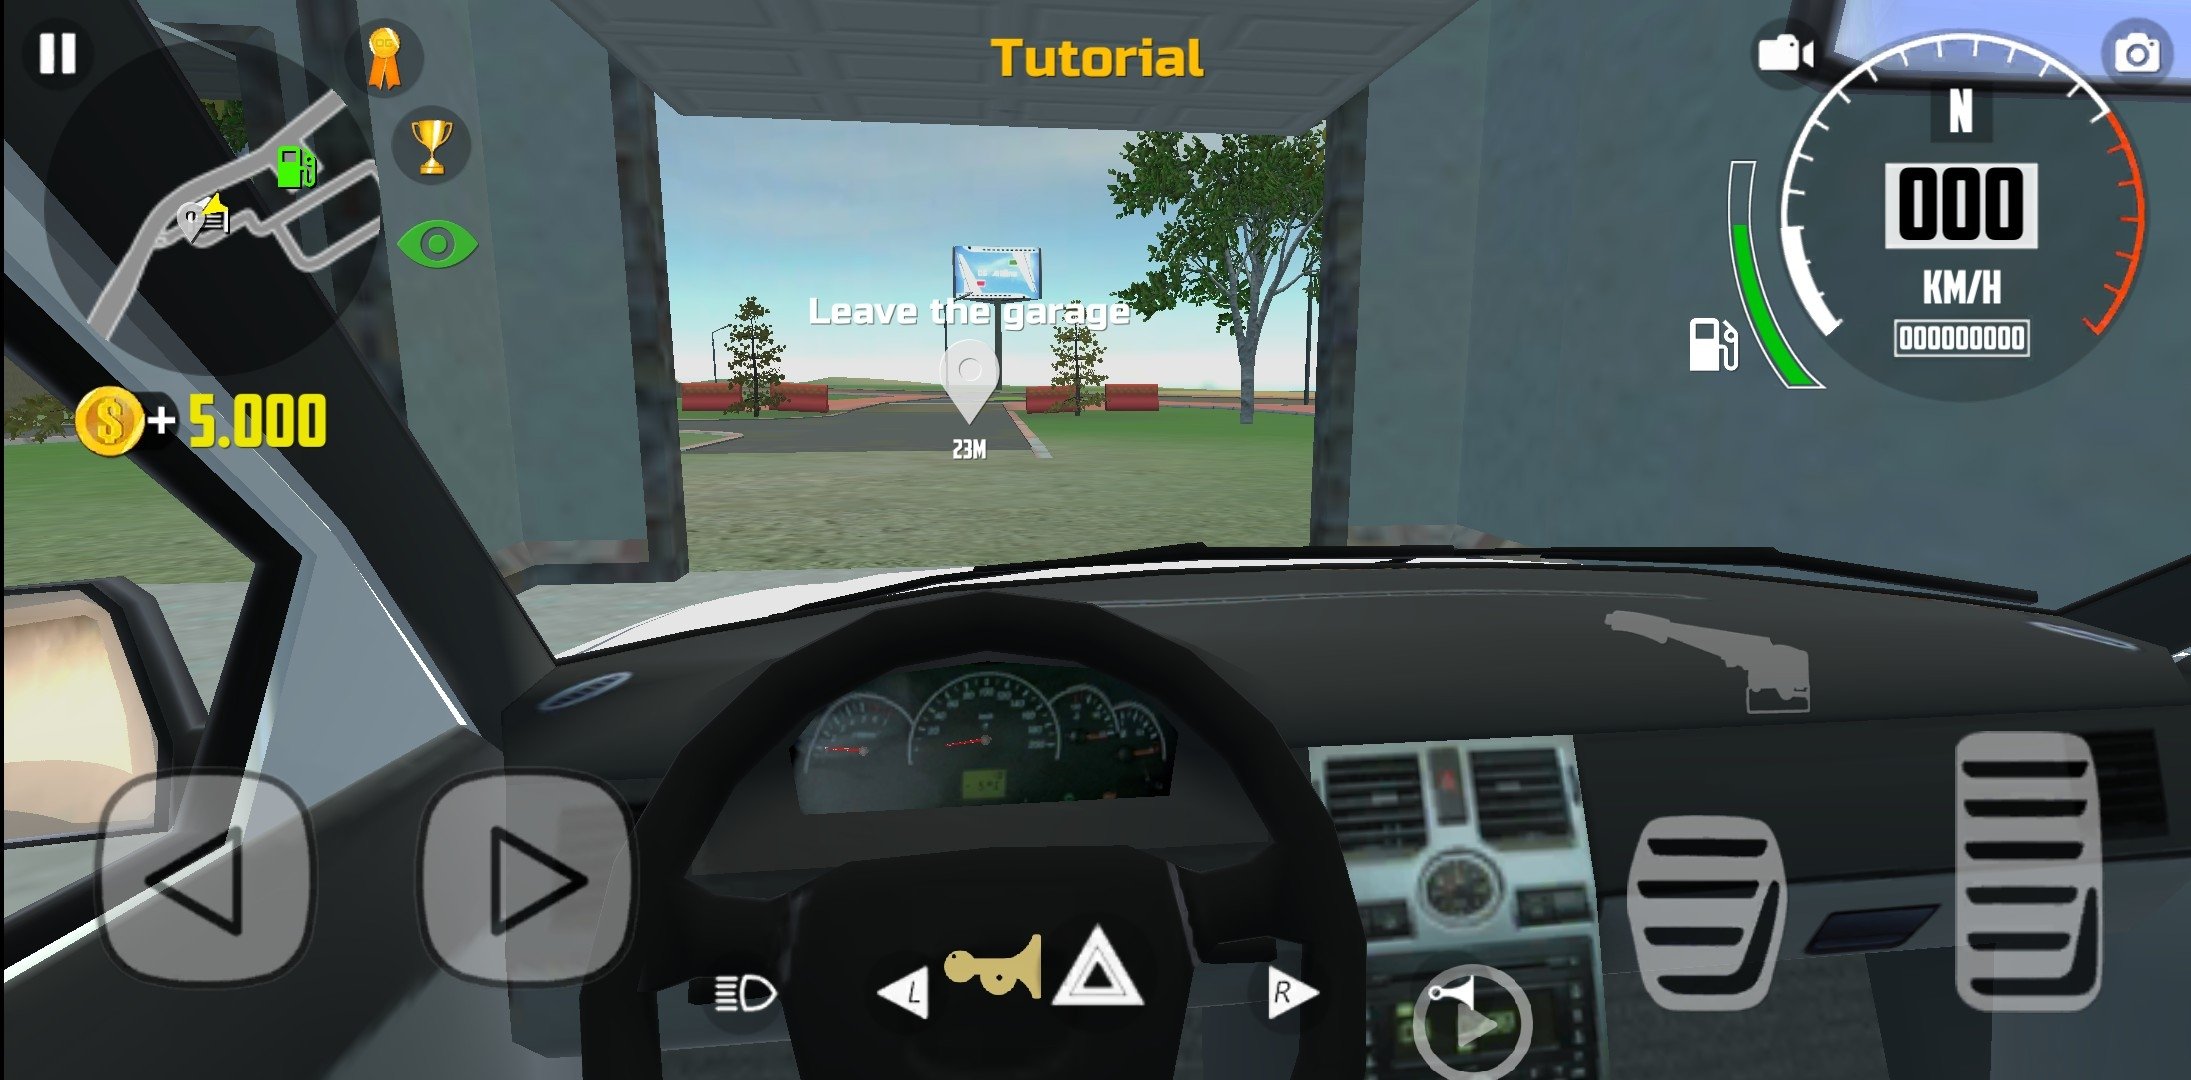 Car Simulator 2 1.41.6  Descargar para Android APK Gratis